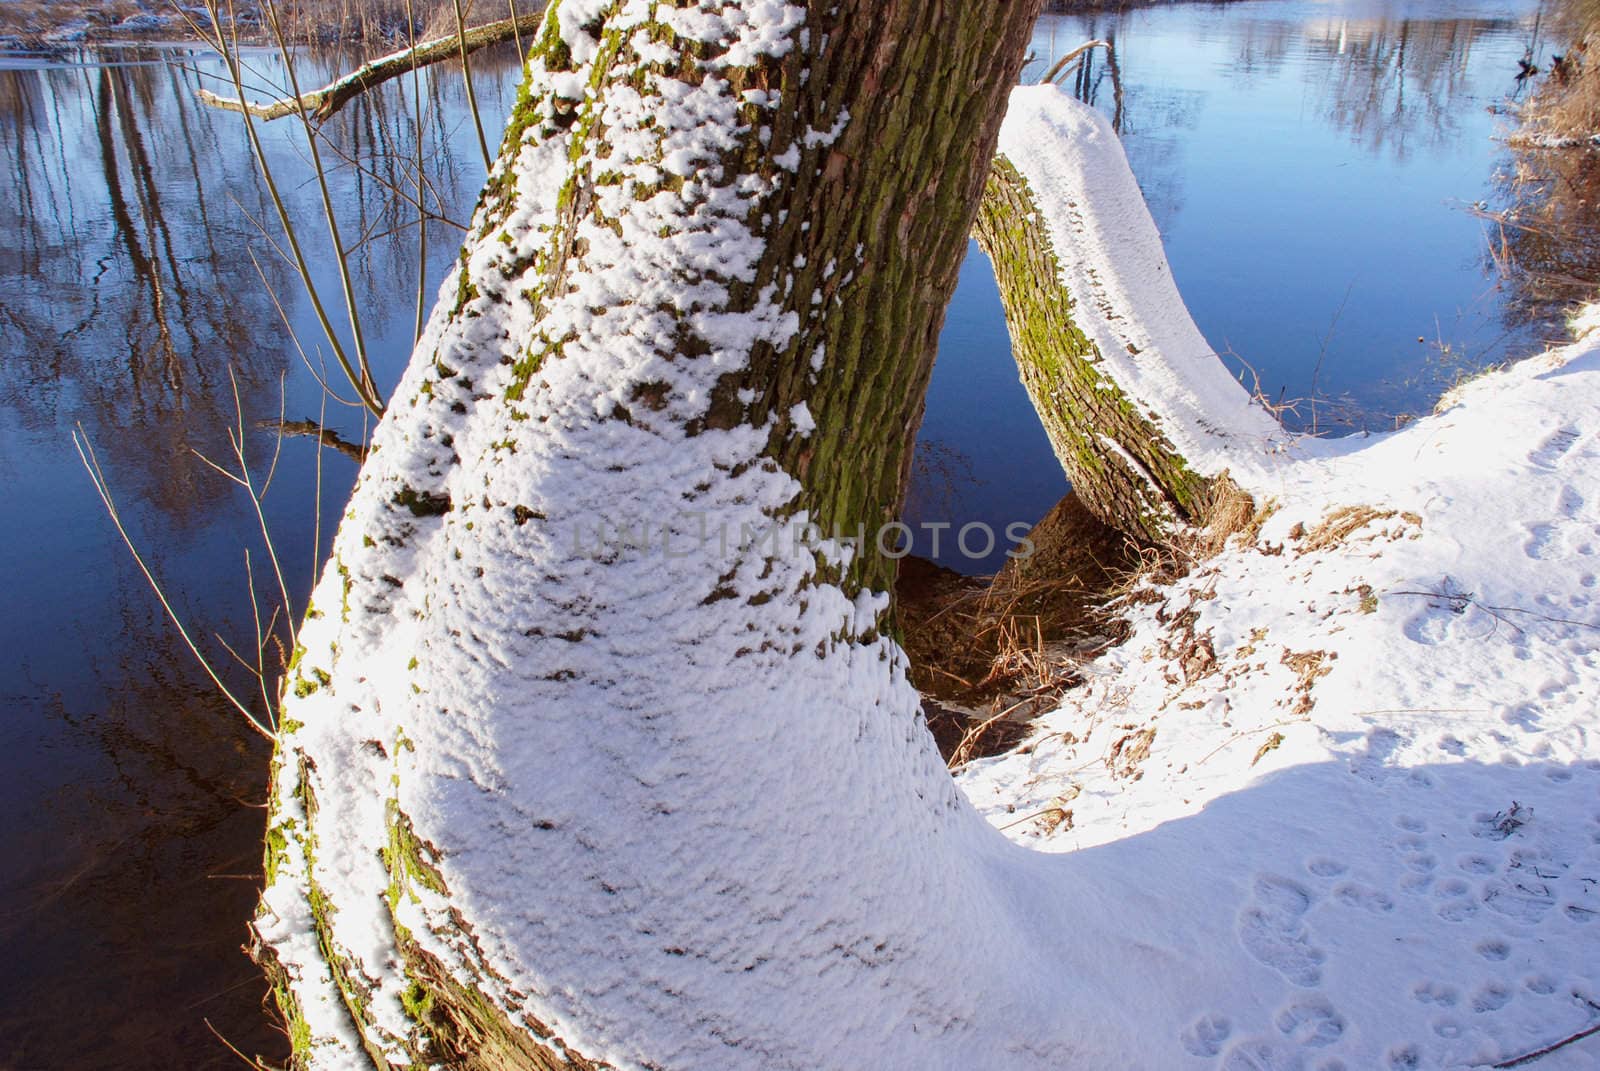 Riverside willow trunks adorned with freshly fallen snow